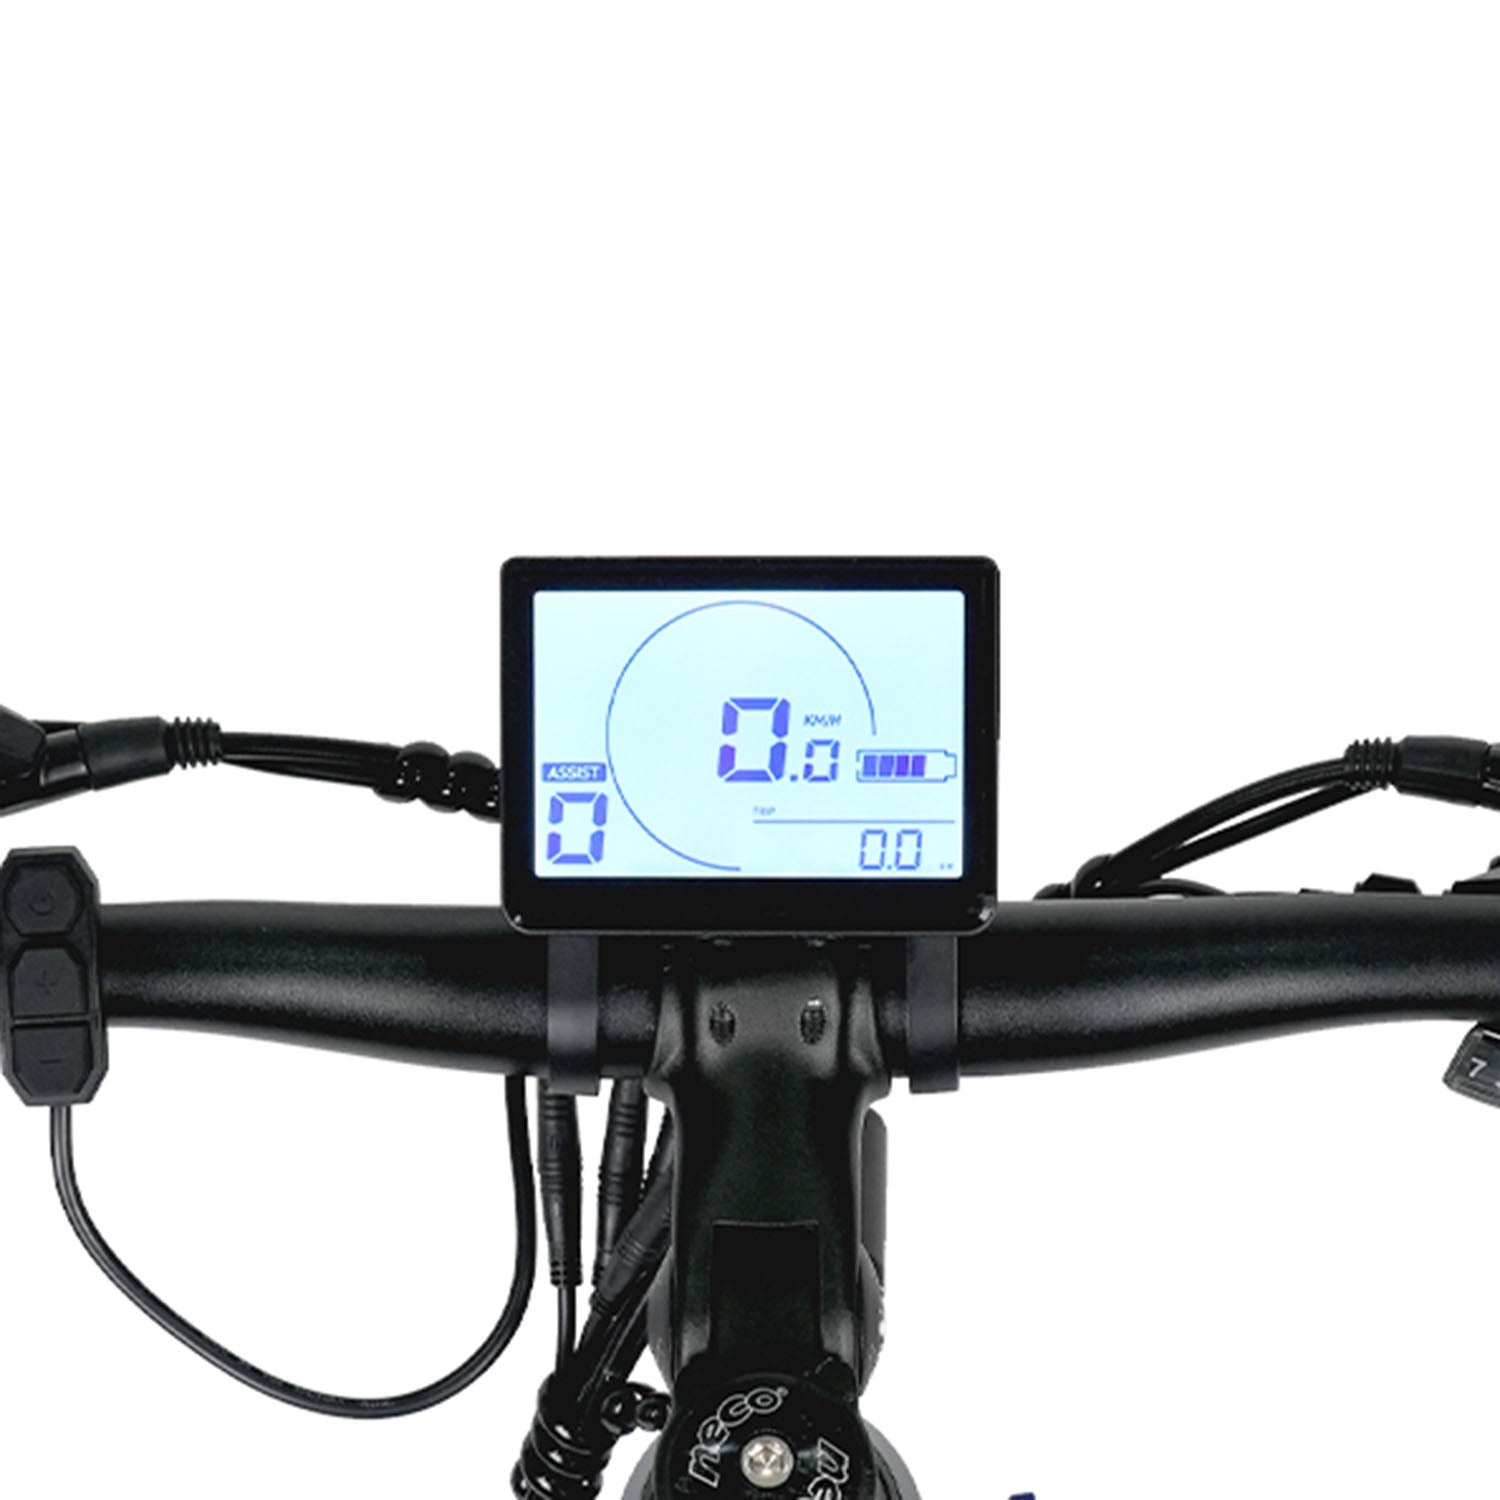 Molicycle R1 250W 26" Electric Trekking Bike City Sähköpyörä 14.5Ah [Pre-Order]